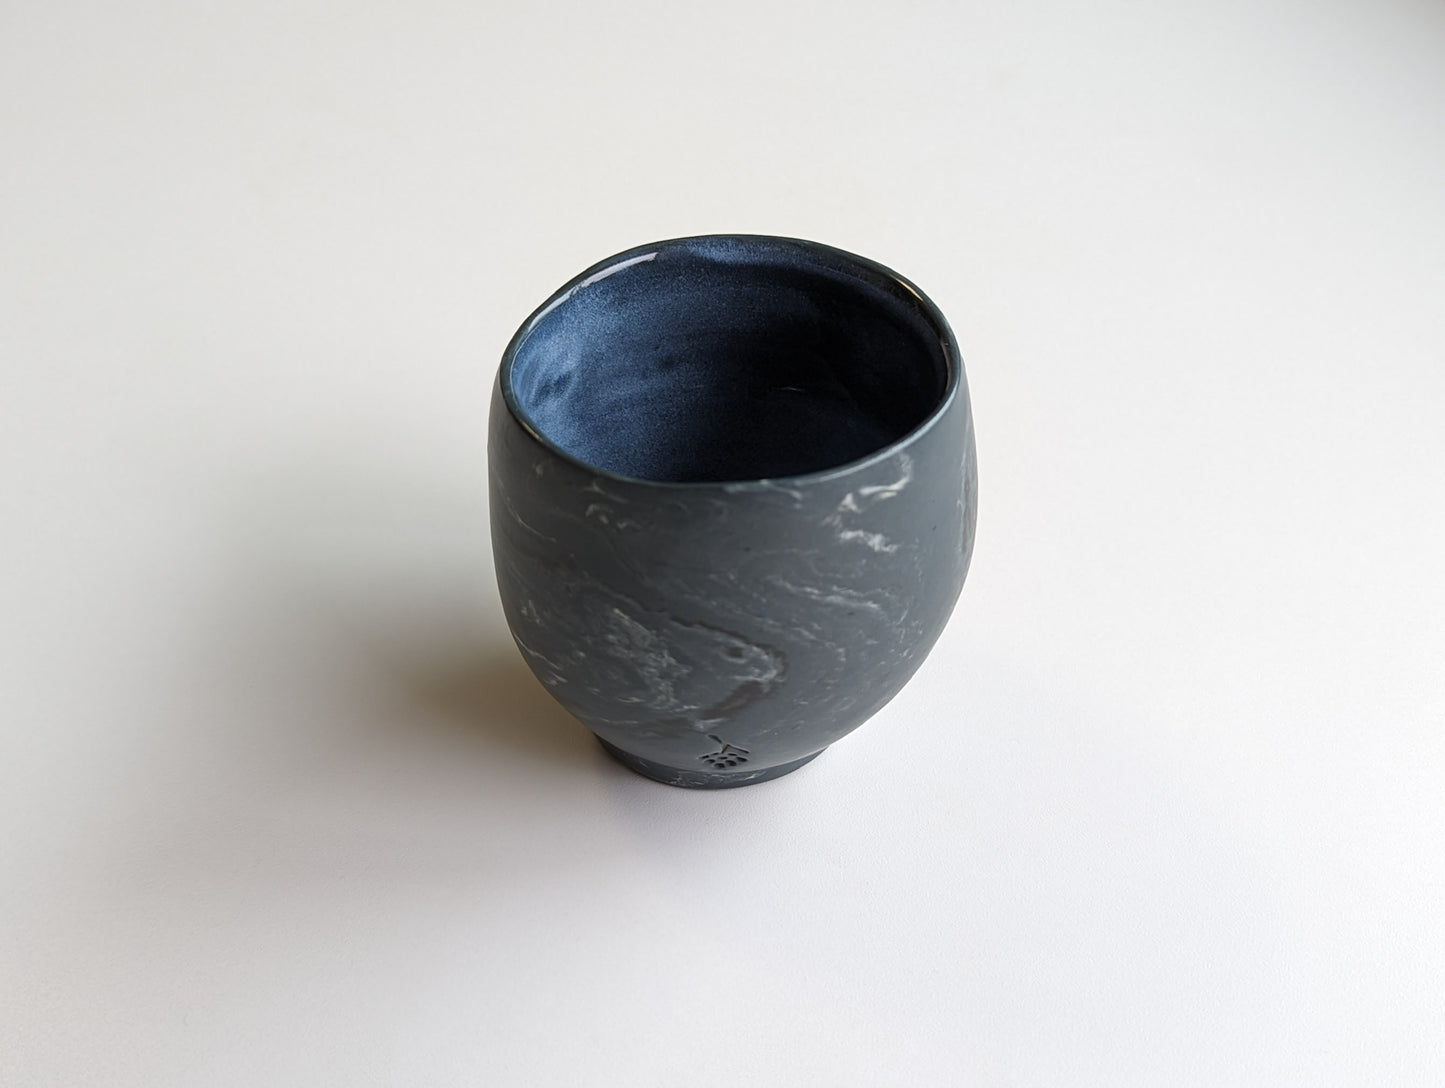 Teacup (yunomi), "Marble", Neptune 2 by Hitofusa no budō, 180ml